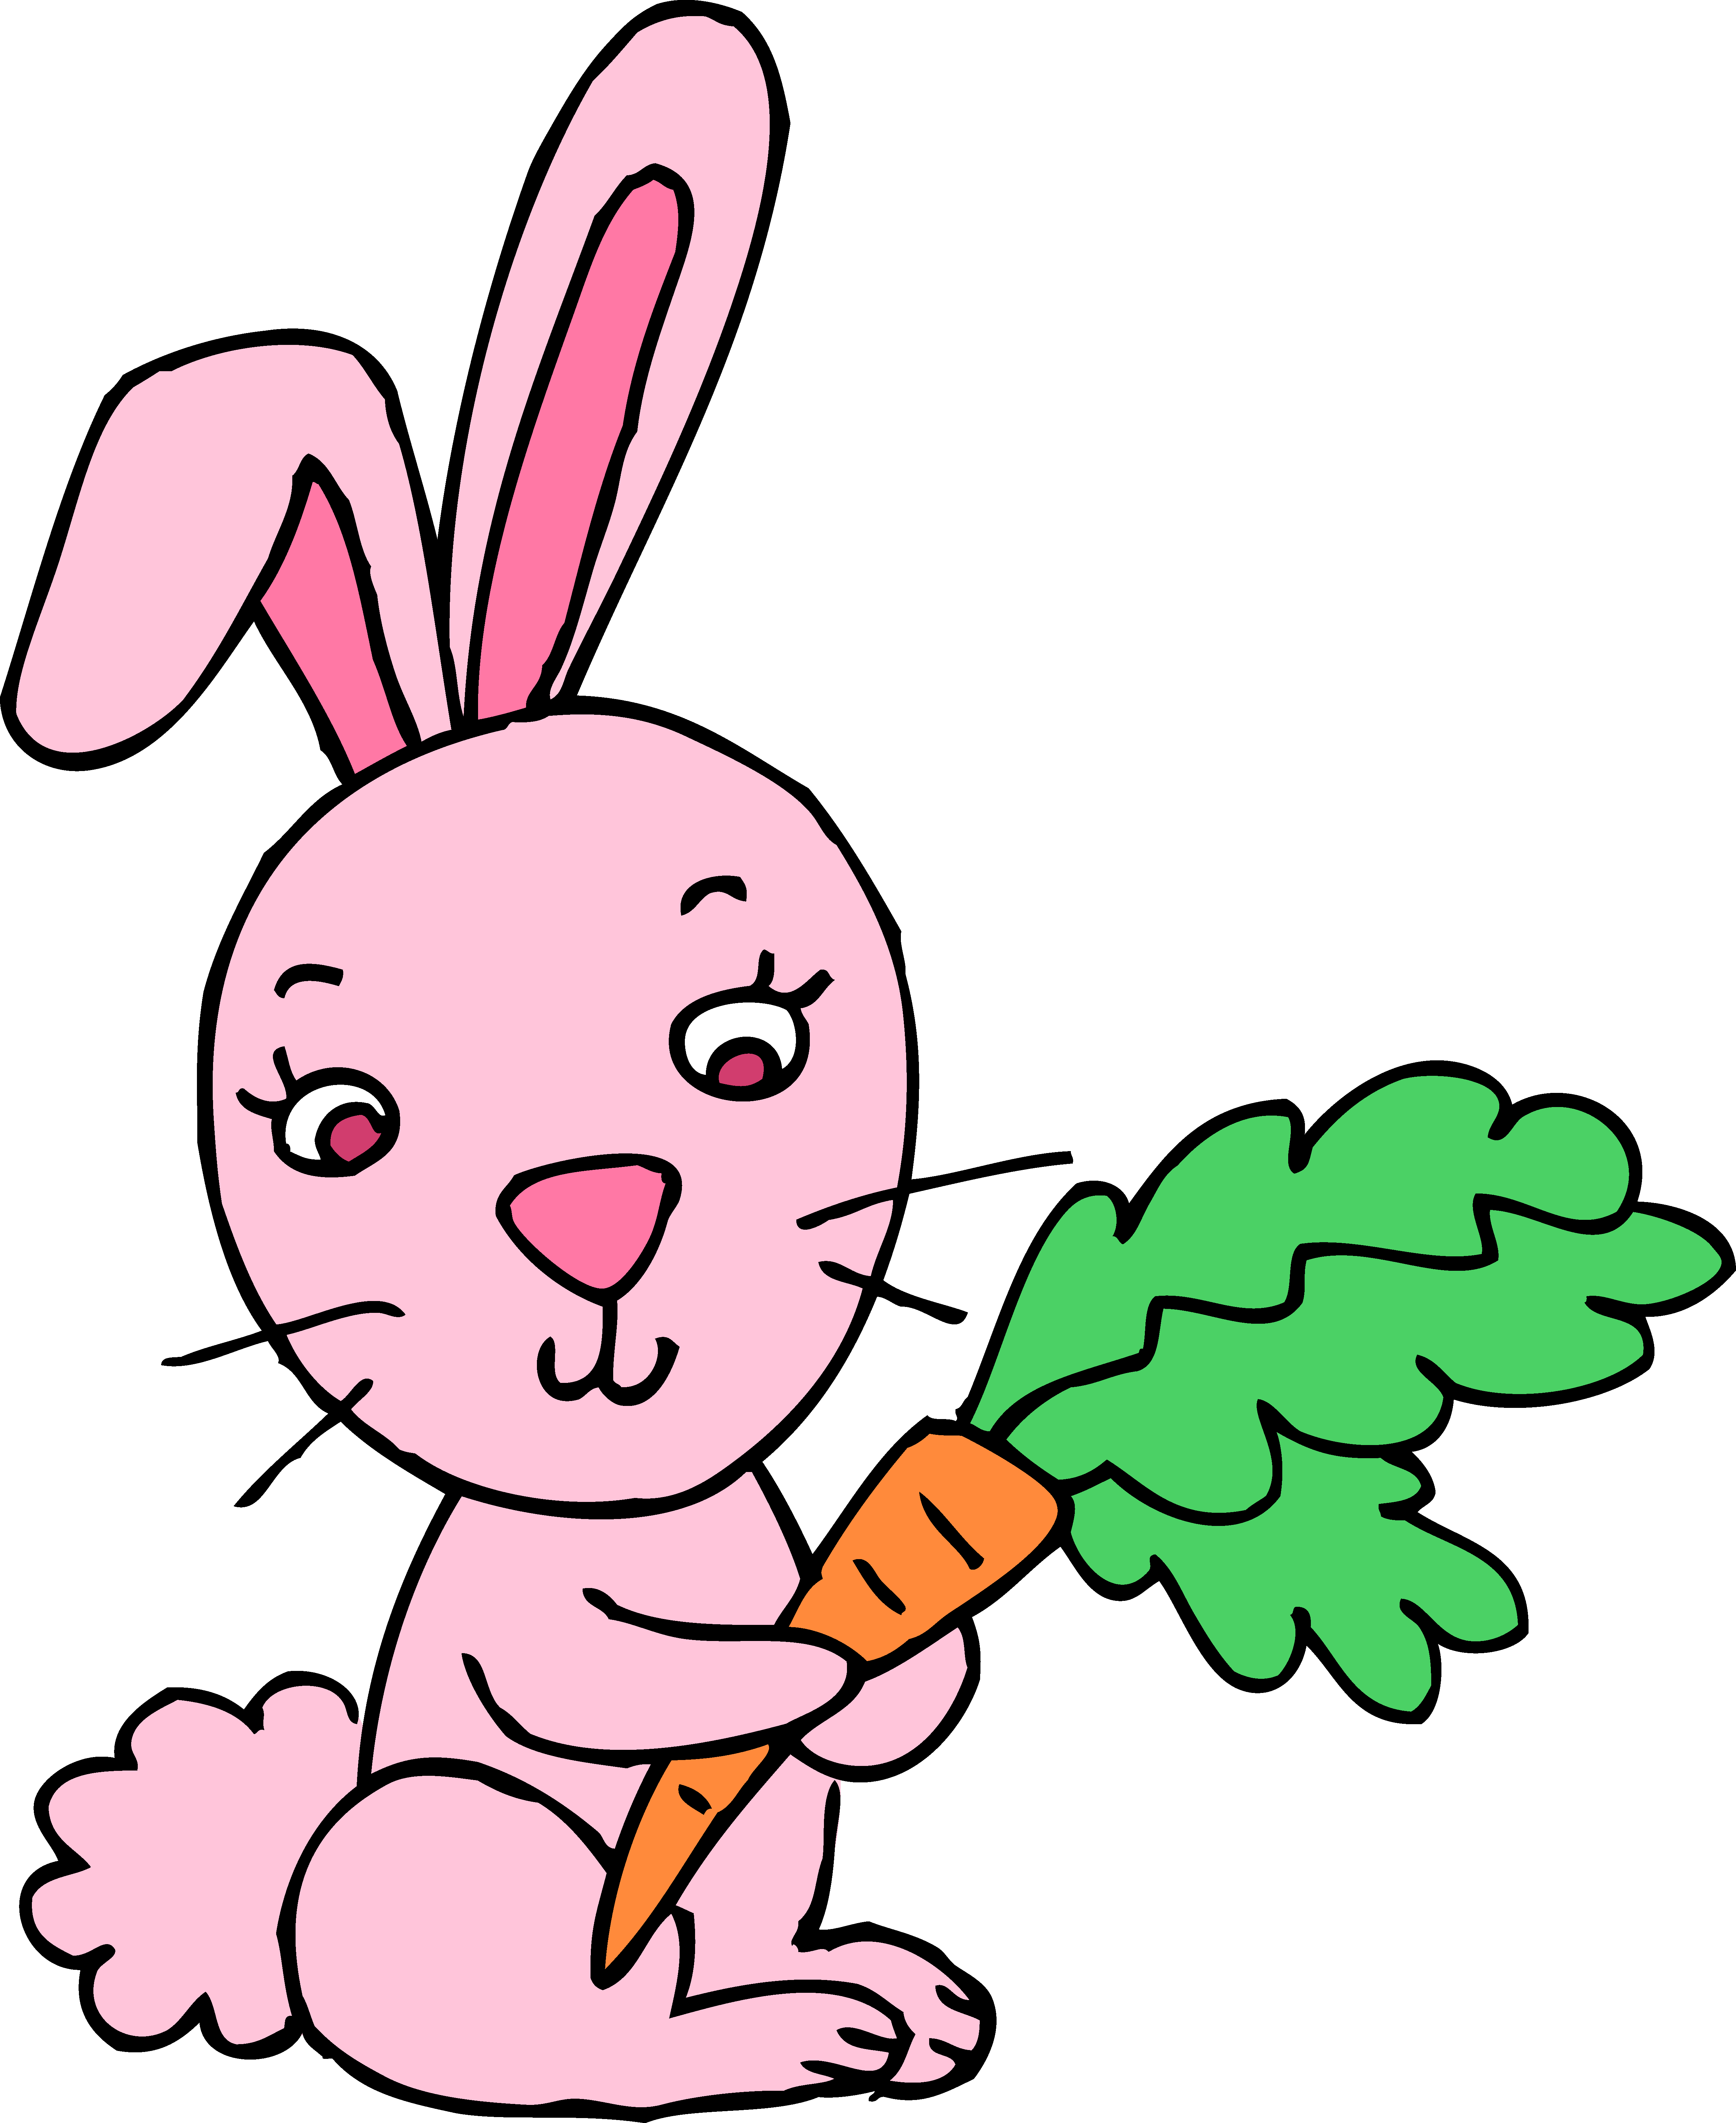 Free Bunny Rabbit Clipart, Download Free Clip Art, Free Clip.